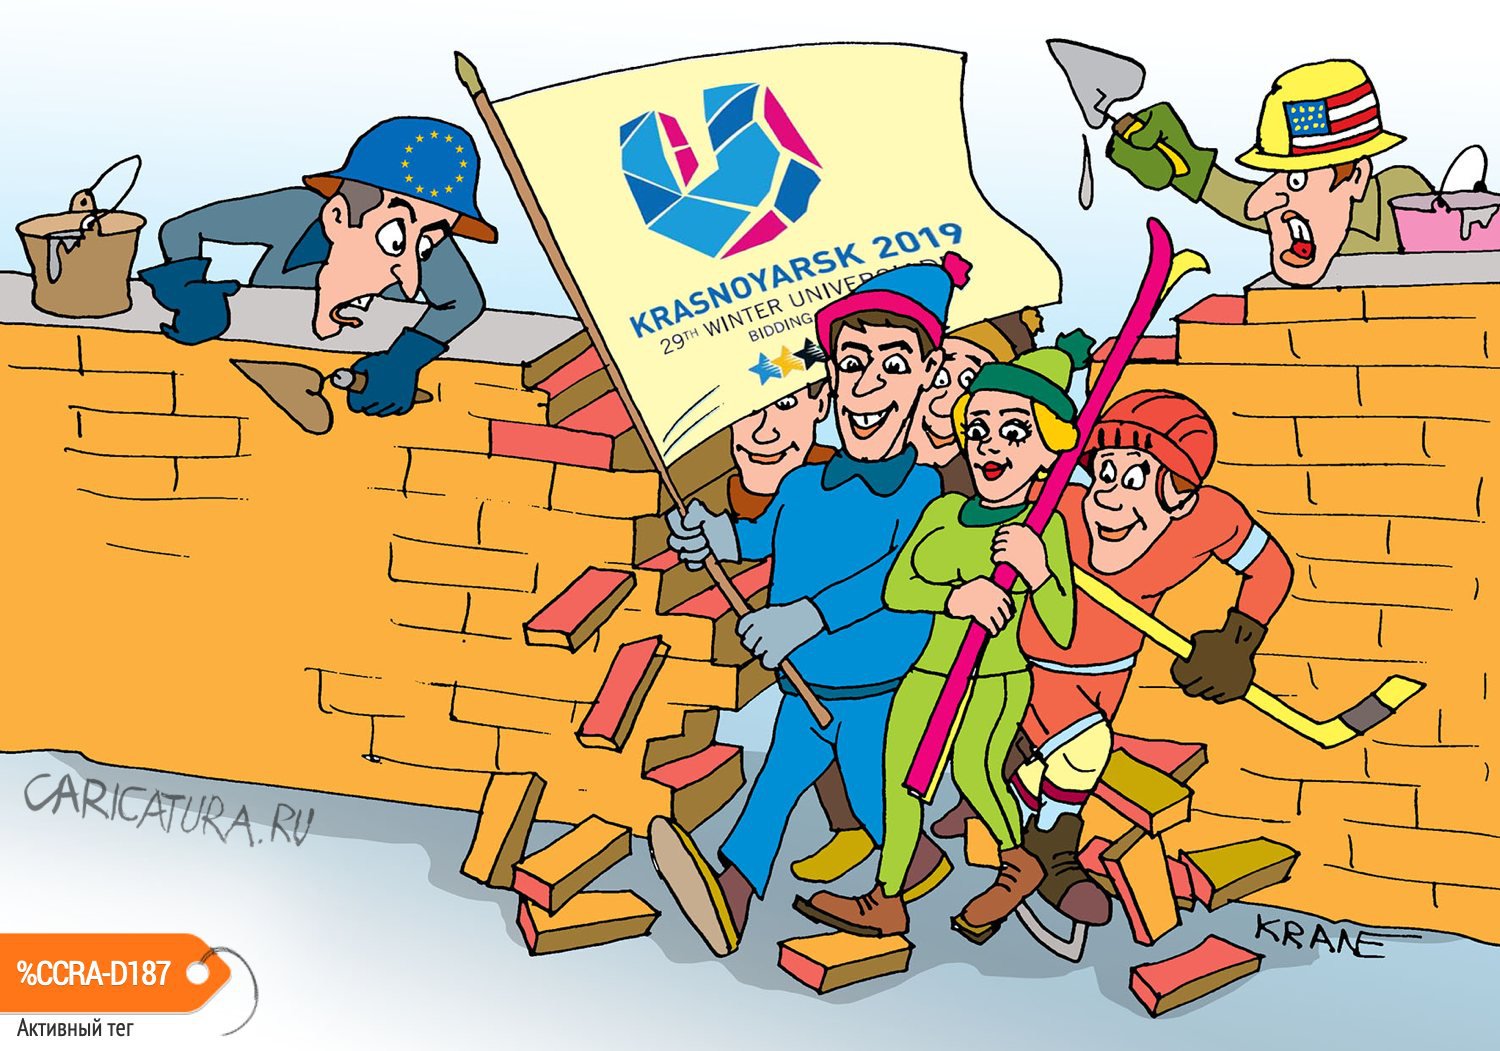 Карикатура "Гуманитарная миссия спорта", Евгений Кран